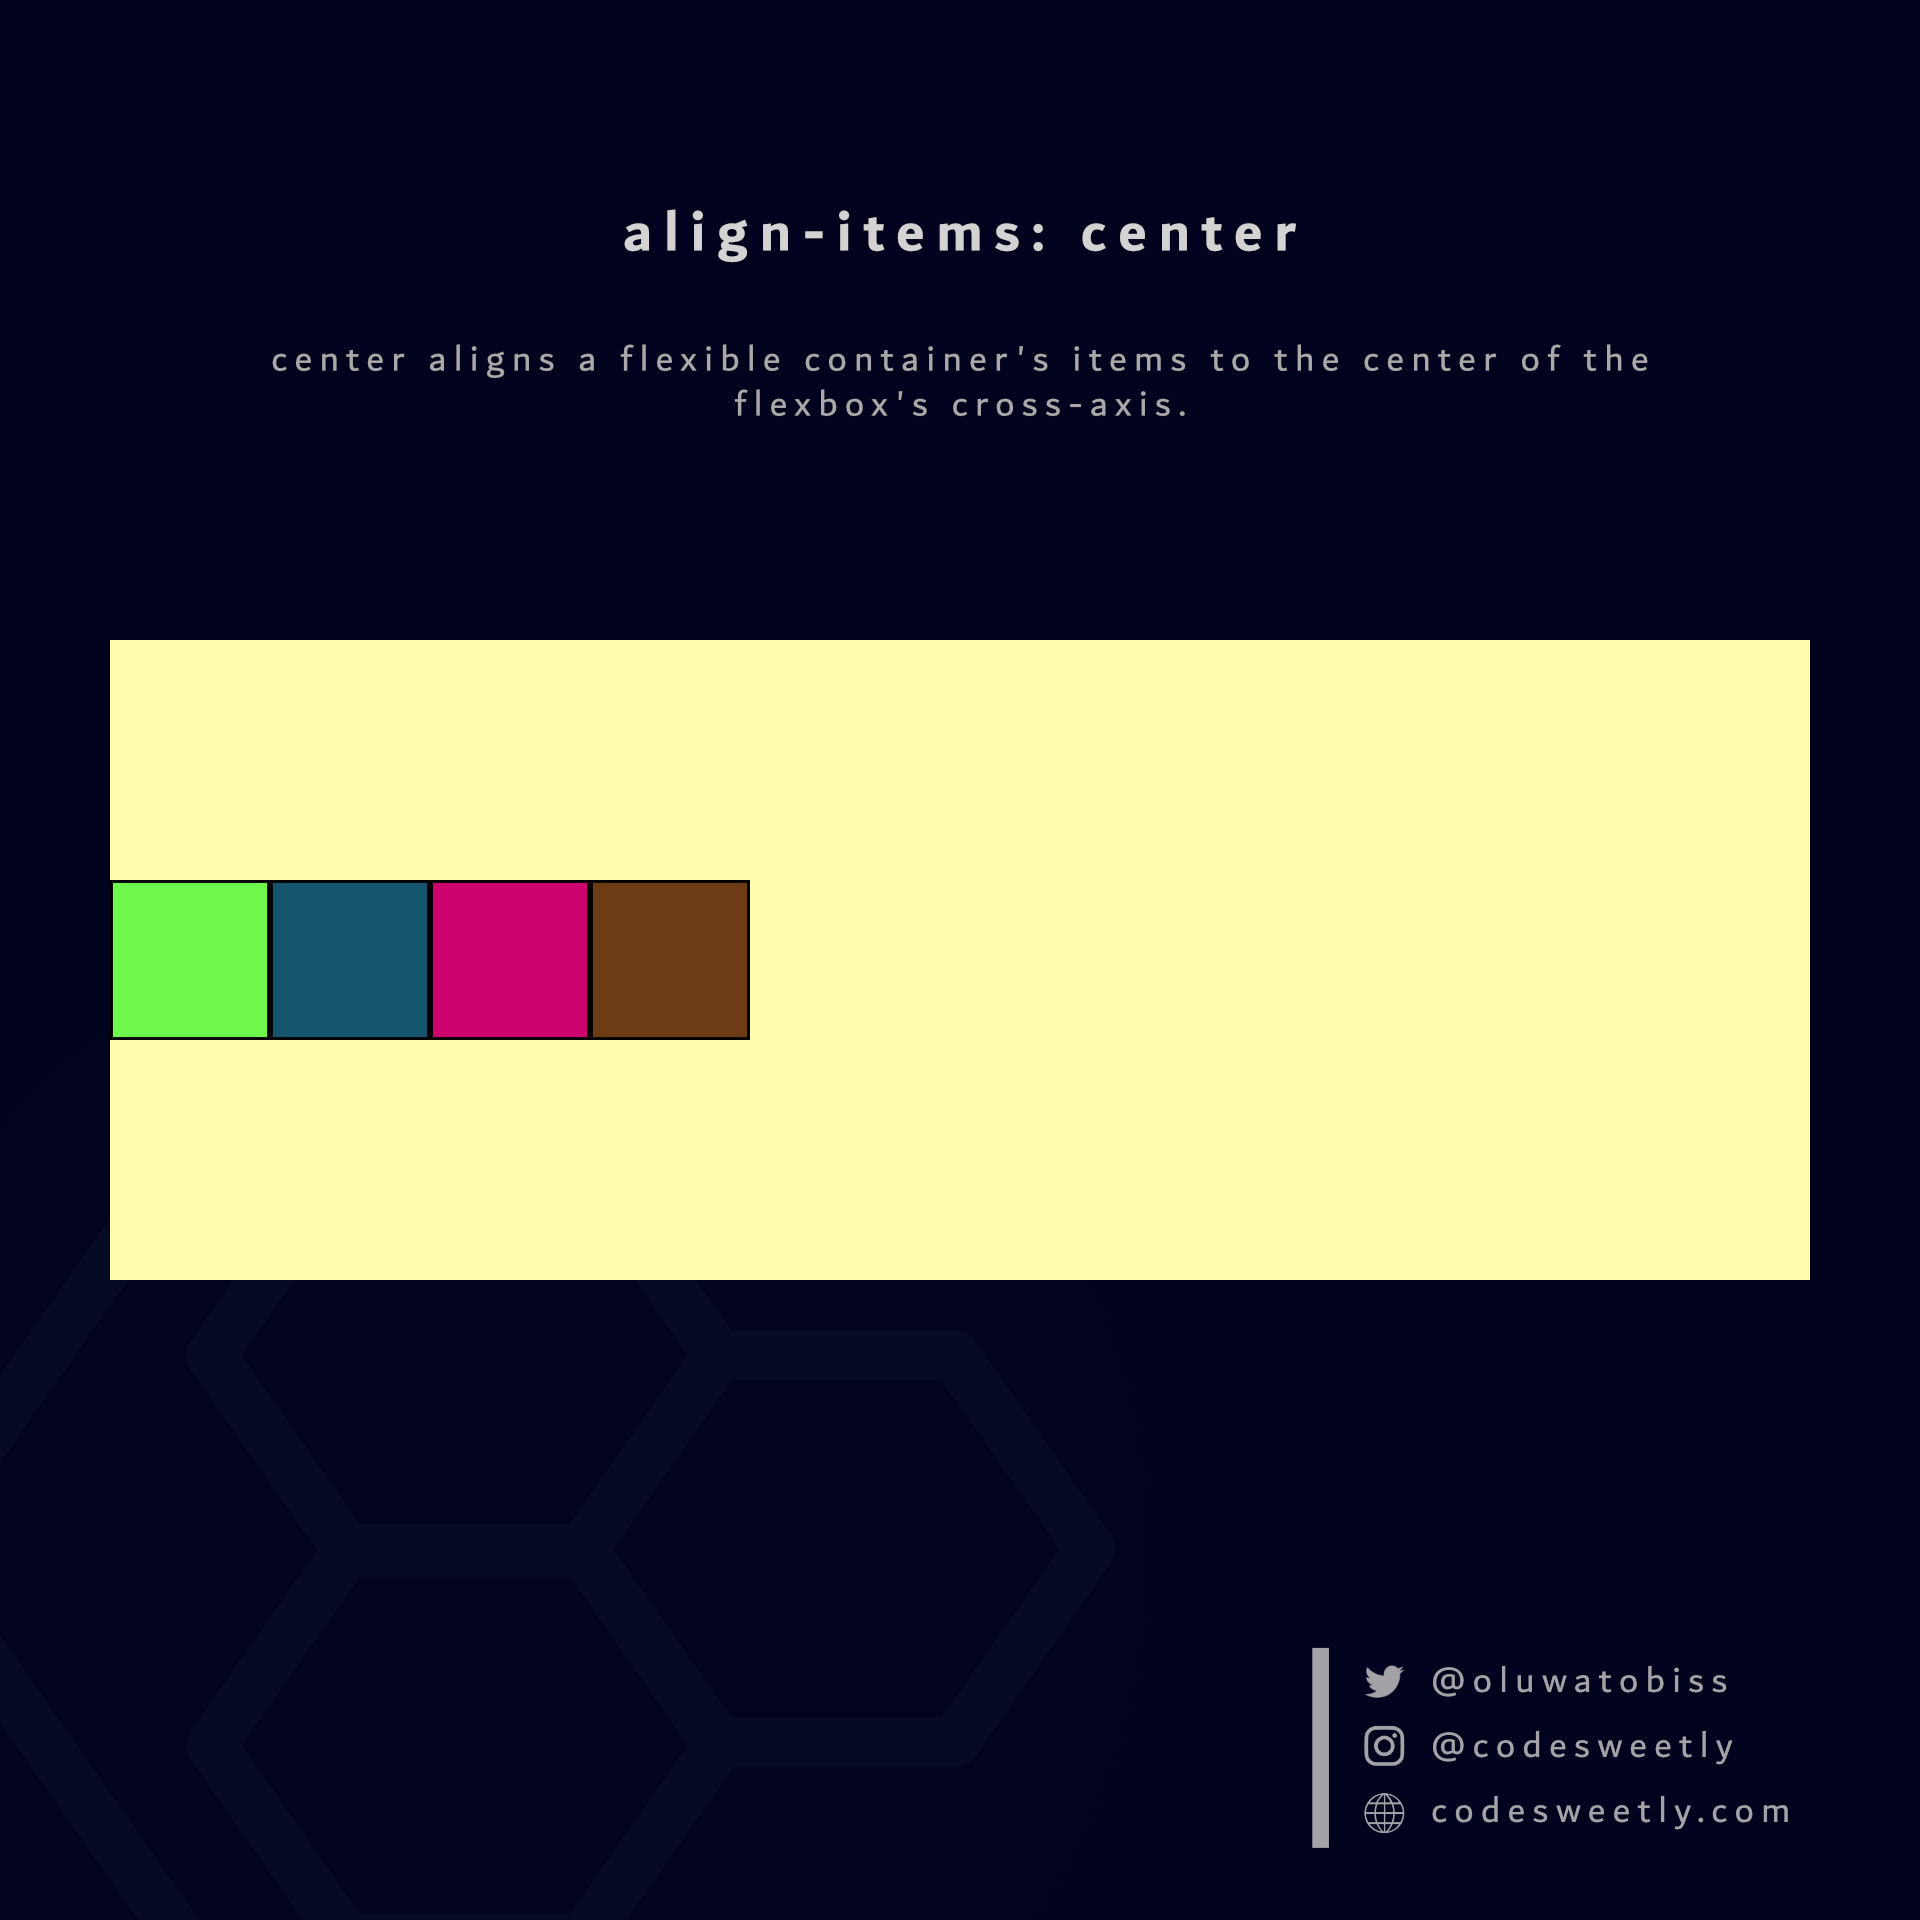 align-items' center value aligns flexible items to the flexbox's center